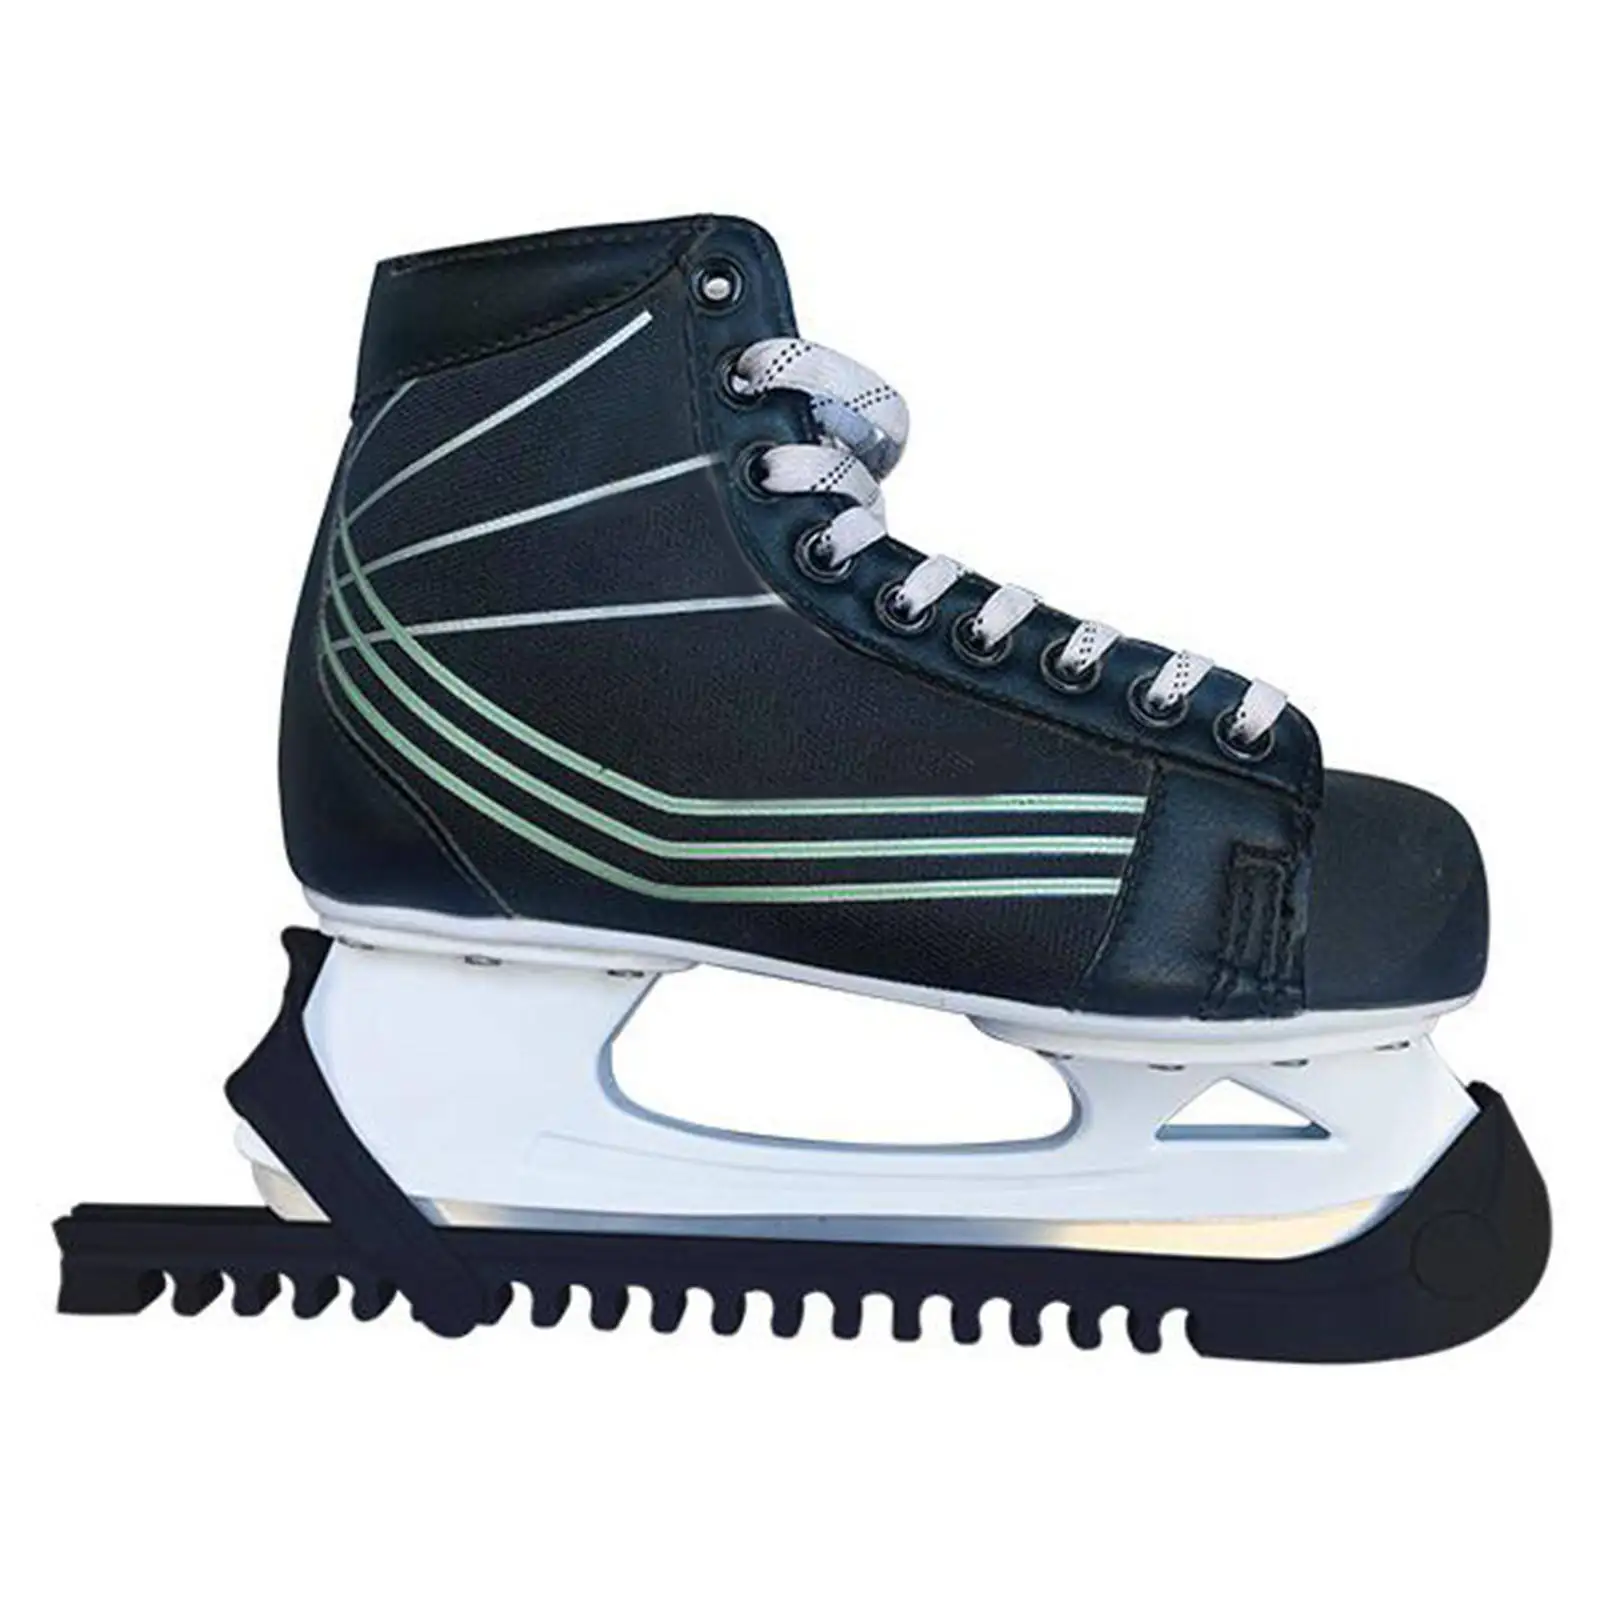 Universal Skate Blade Guard Ice Hockey Figure Skating Protector 